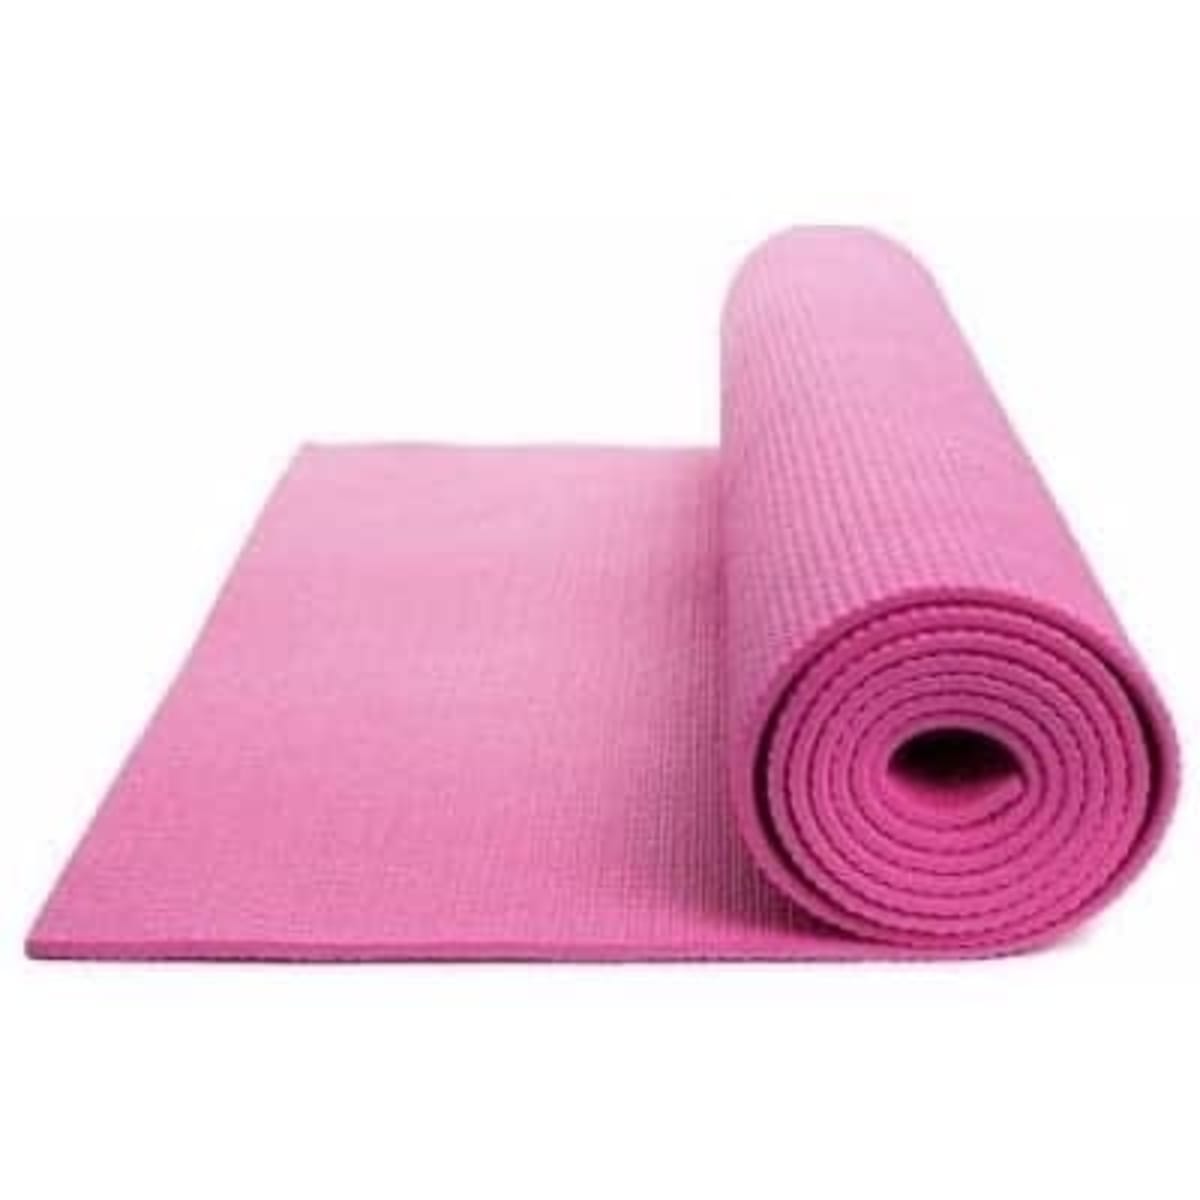 Yoga Mat + Mobile Carrier - Pink Yoga Mat